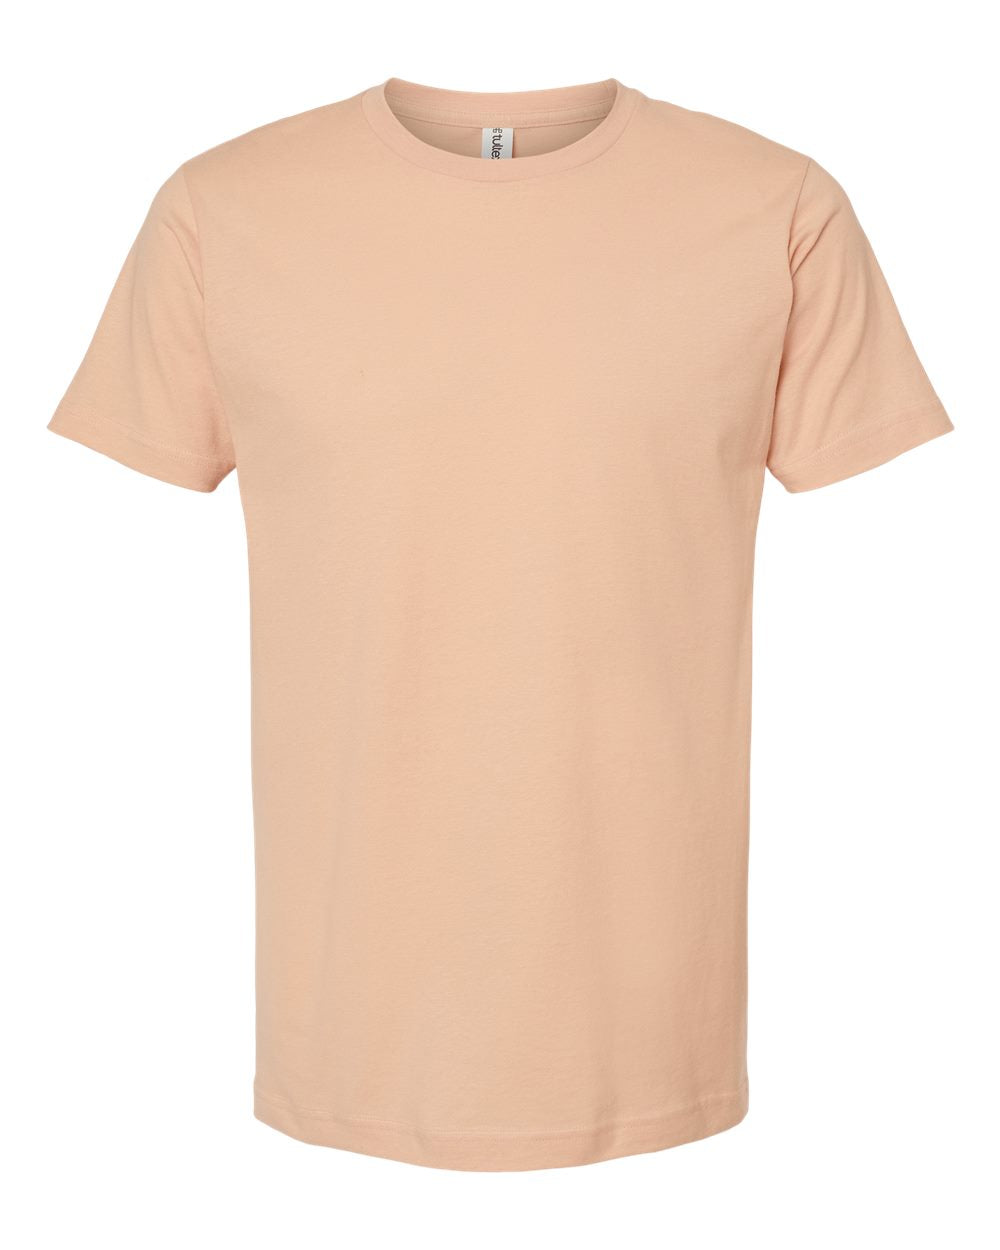 Tultex 202 Adult Shirt - XS-Medium